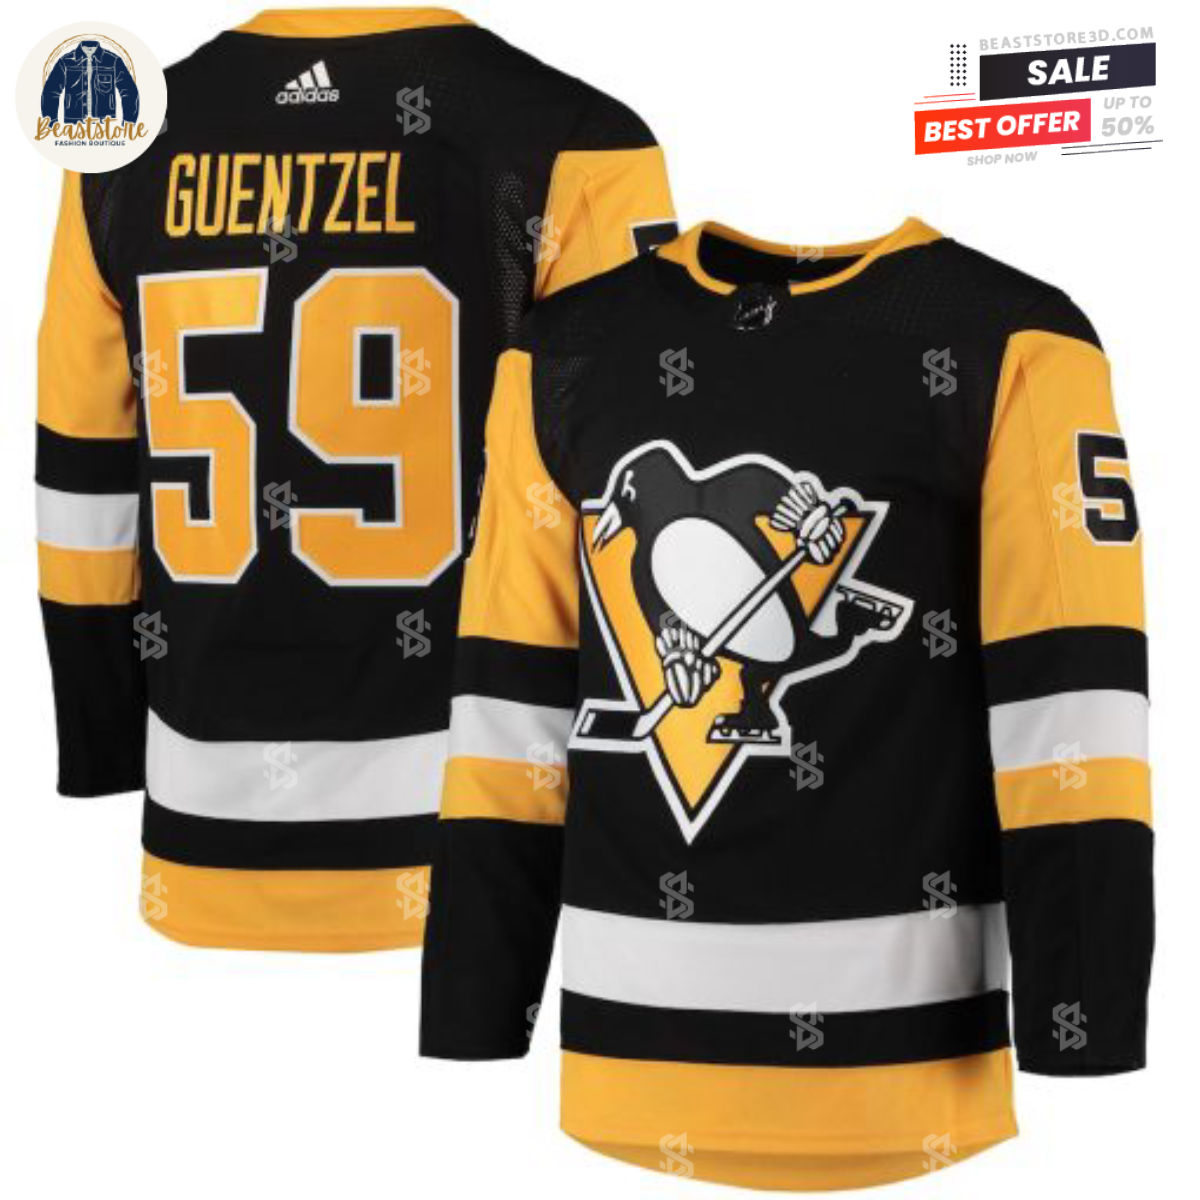 Pittsburgh Penguins Jake Guentzel Black Home Adidas NHL Hockey Jerseys